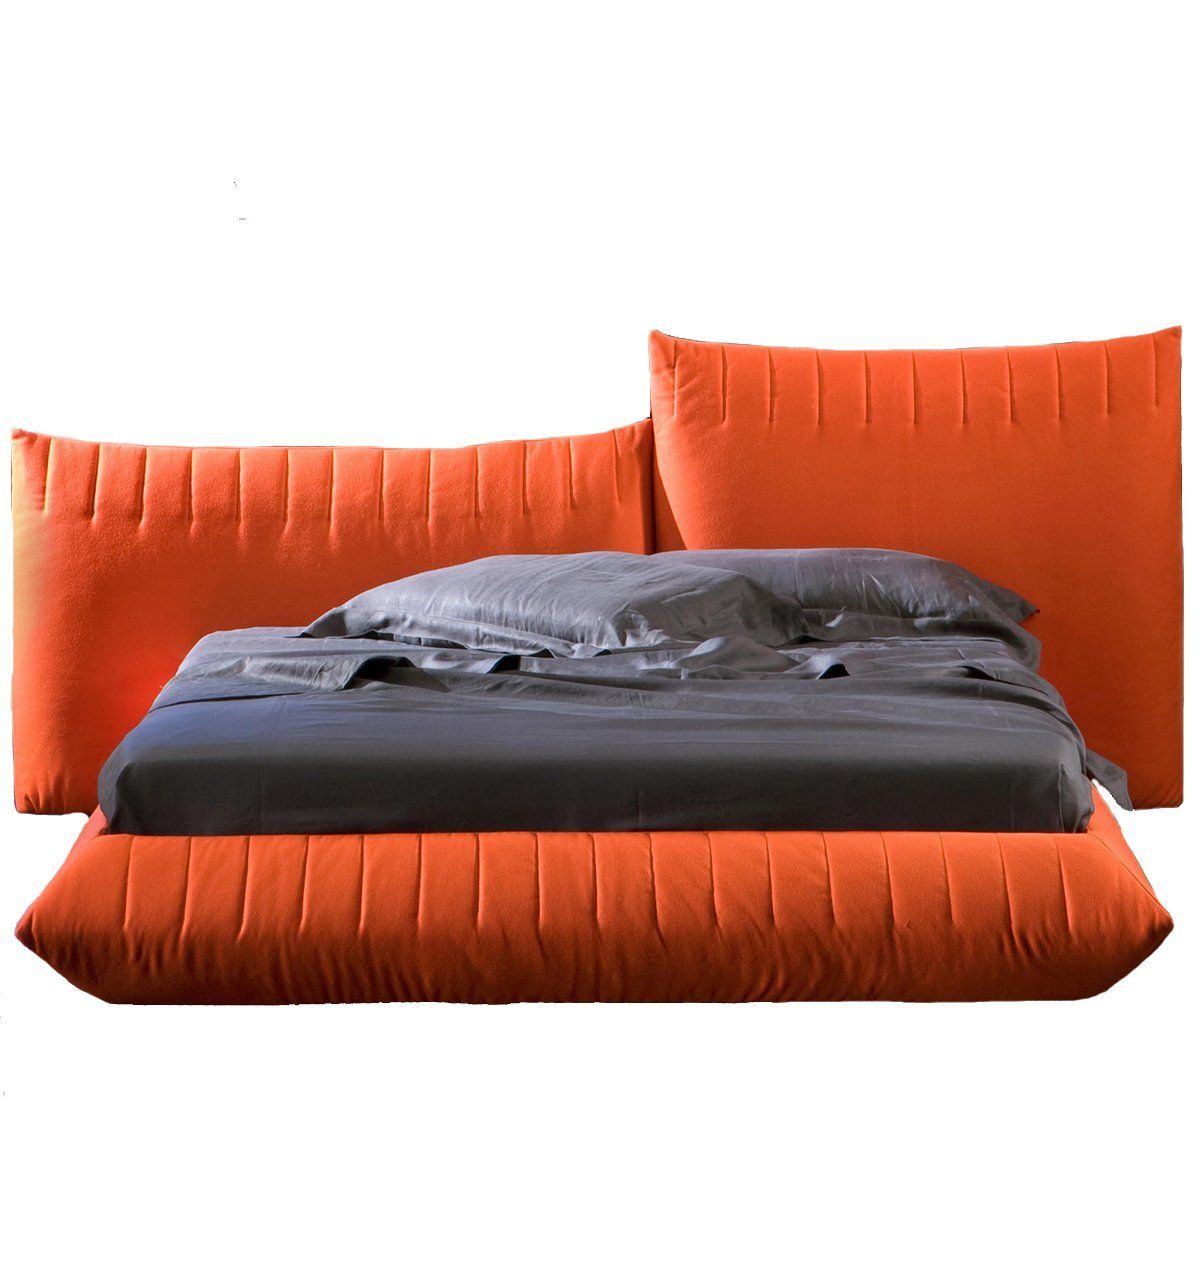 Double bed 160x200 cm orange Bellavita